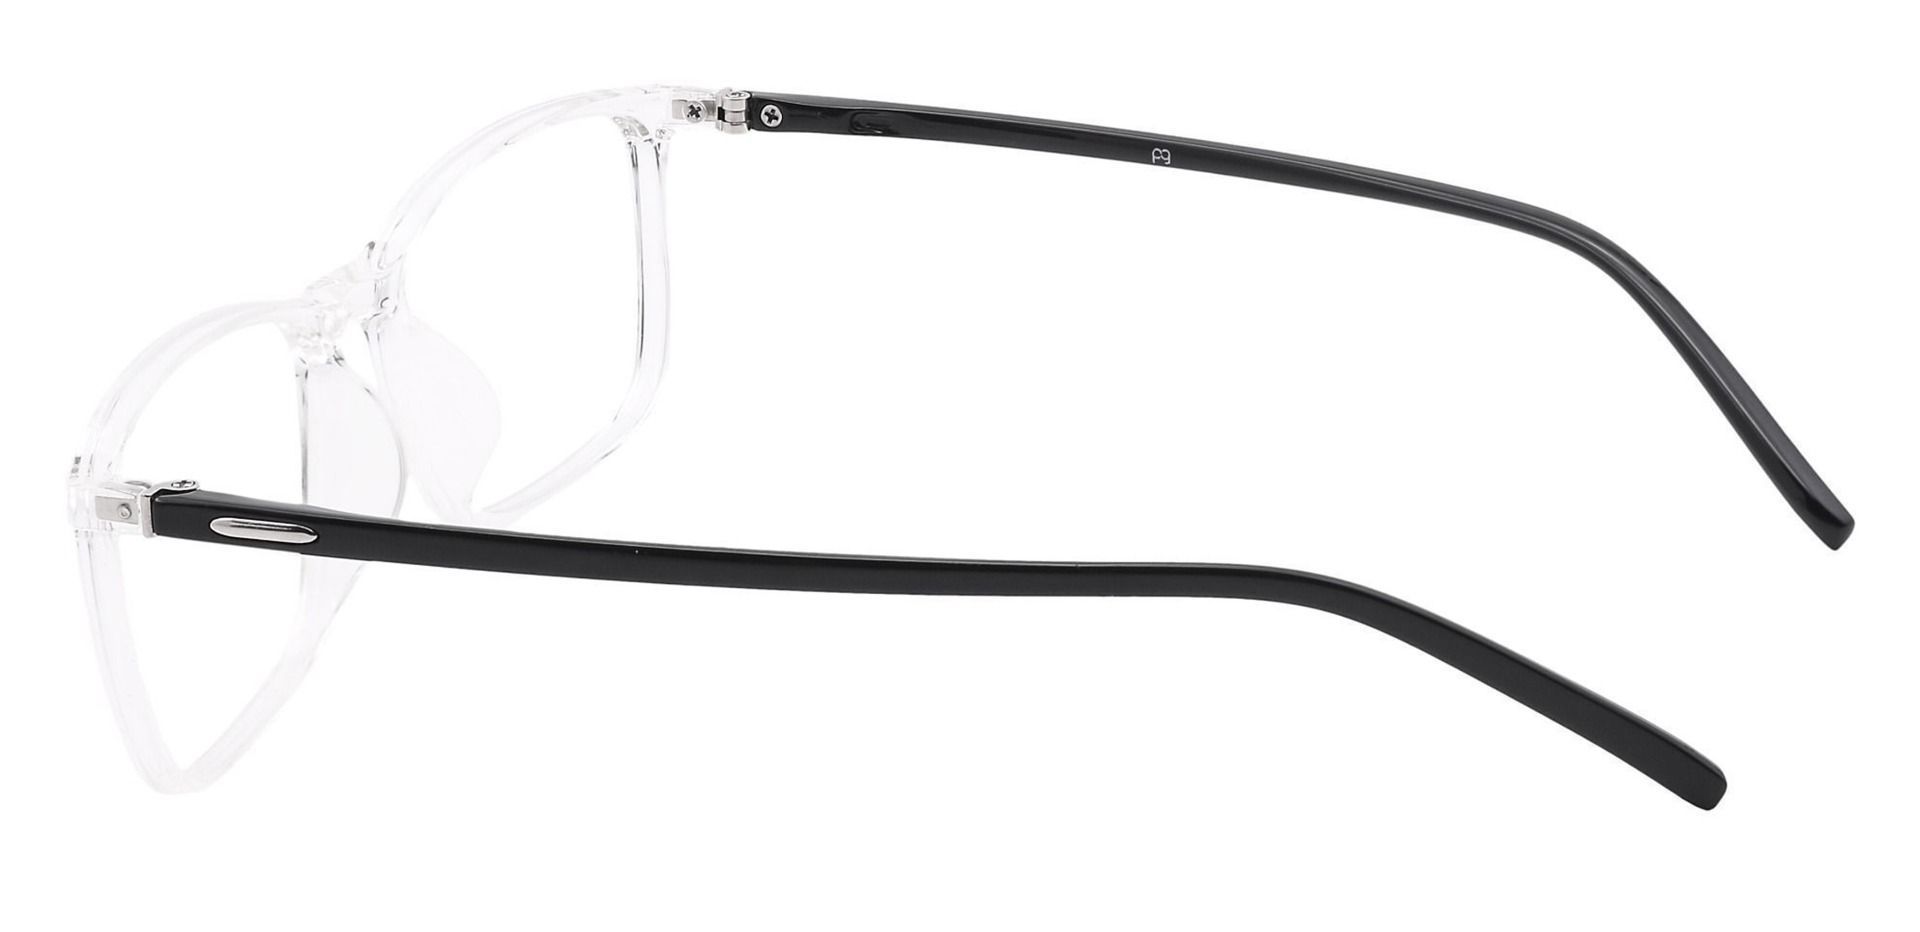 Thin Optics Full Rim (+1.50) Rectangle Reading Glasses Price in